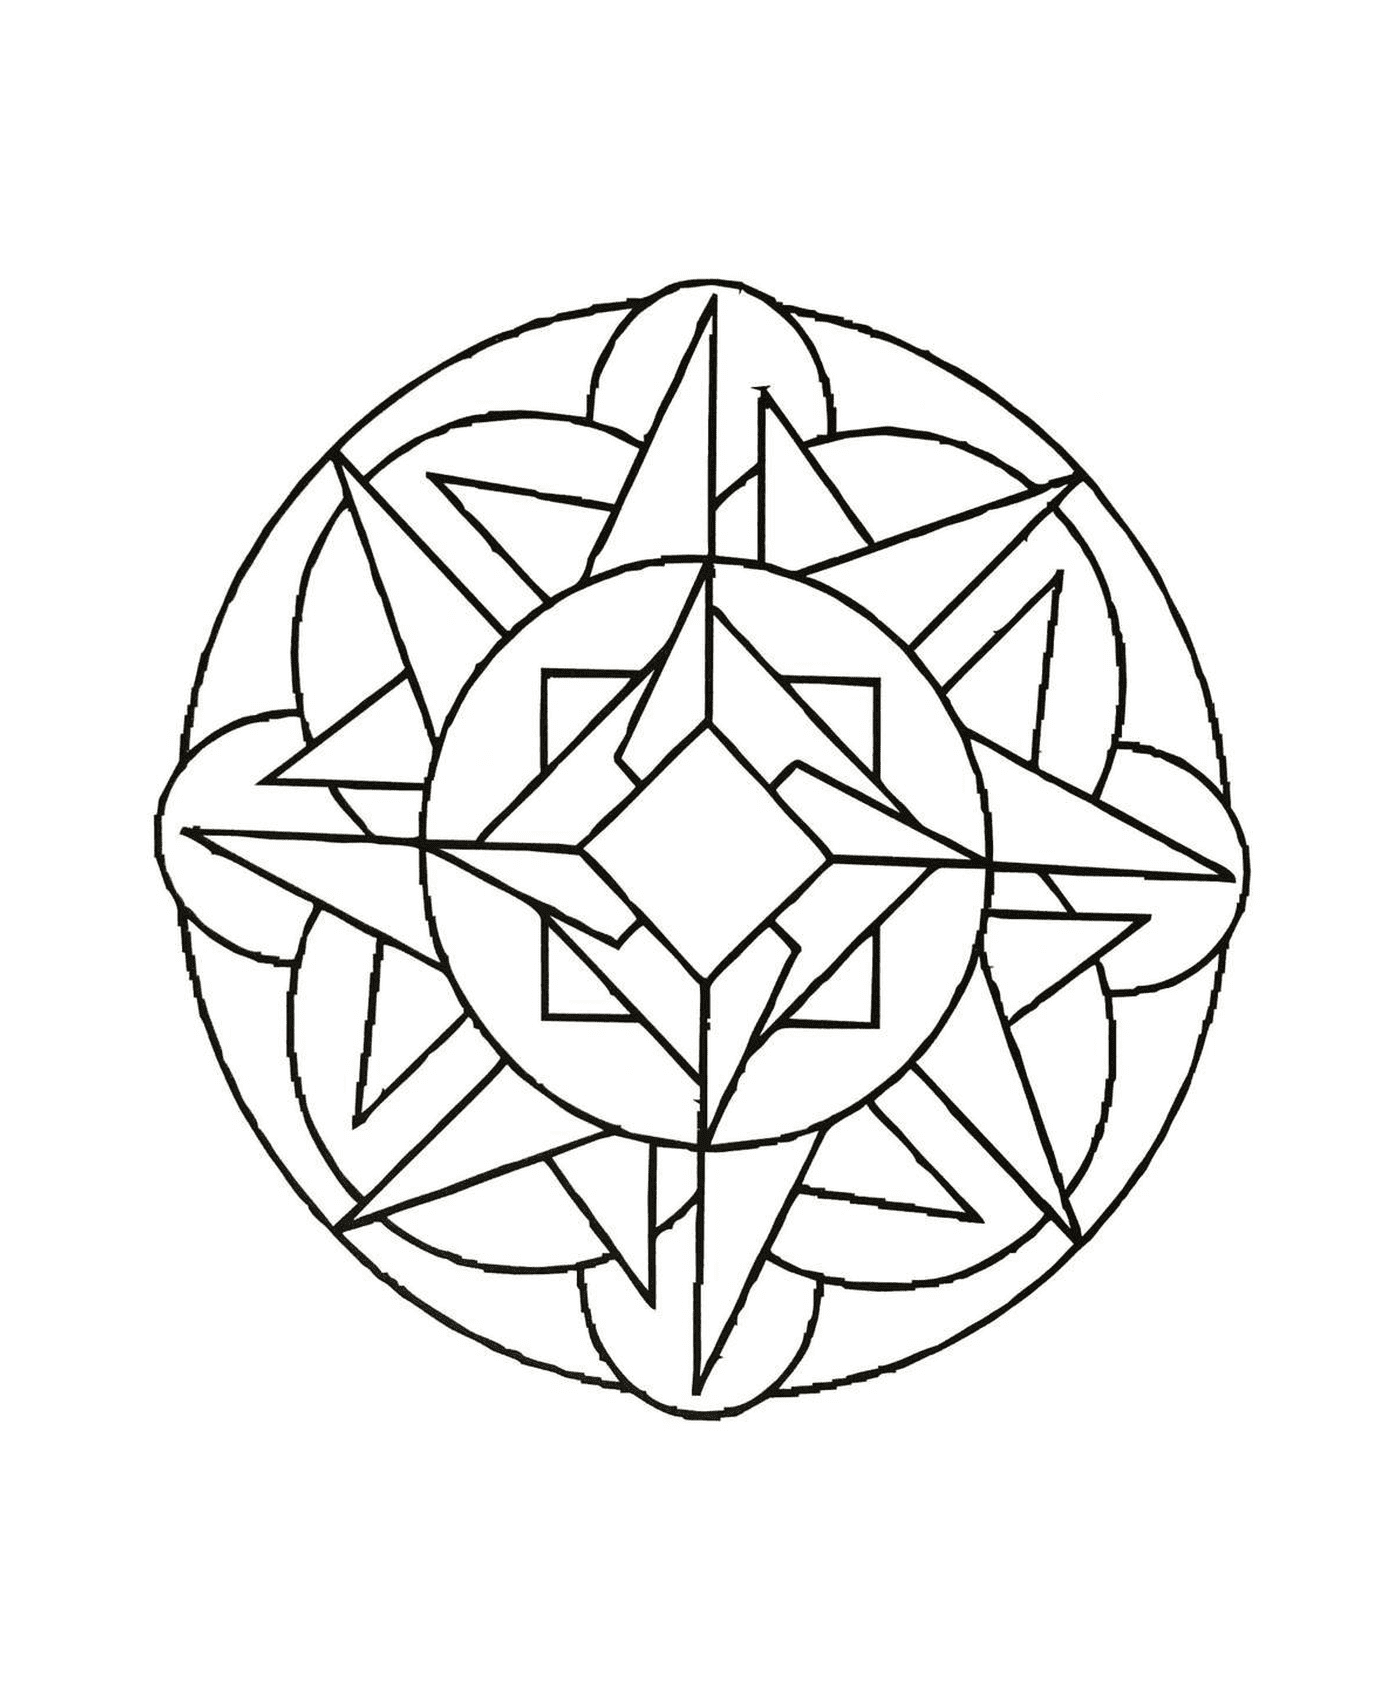  Mandala geométrica elaborada 